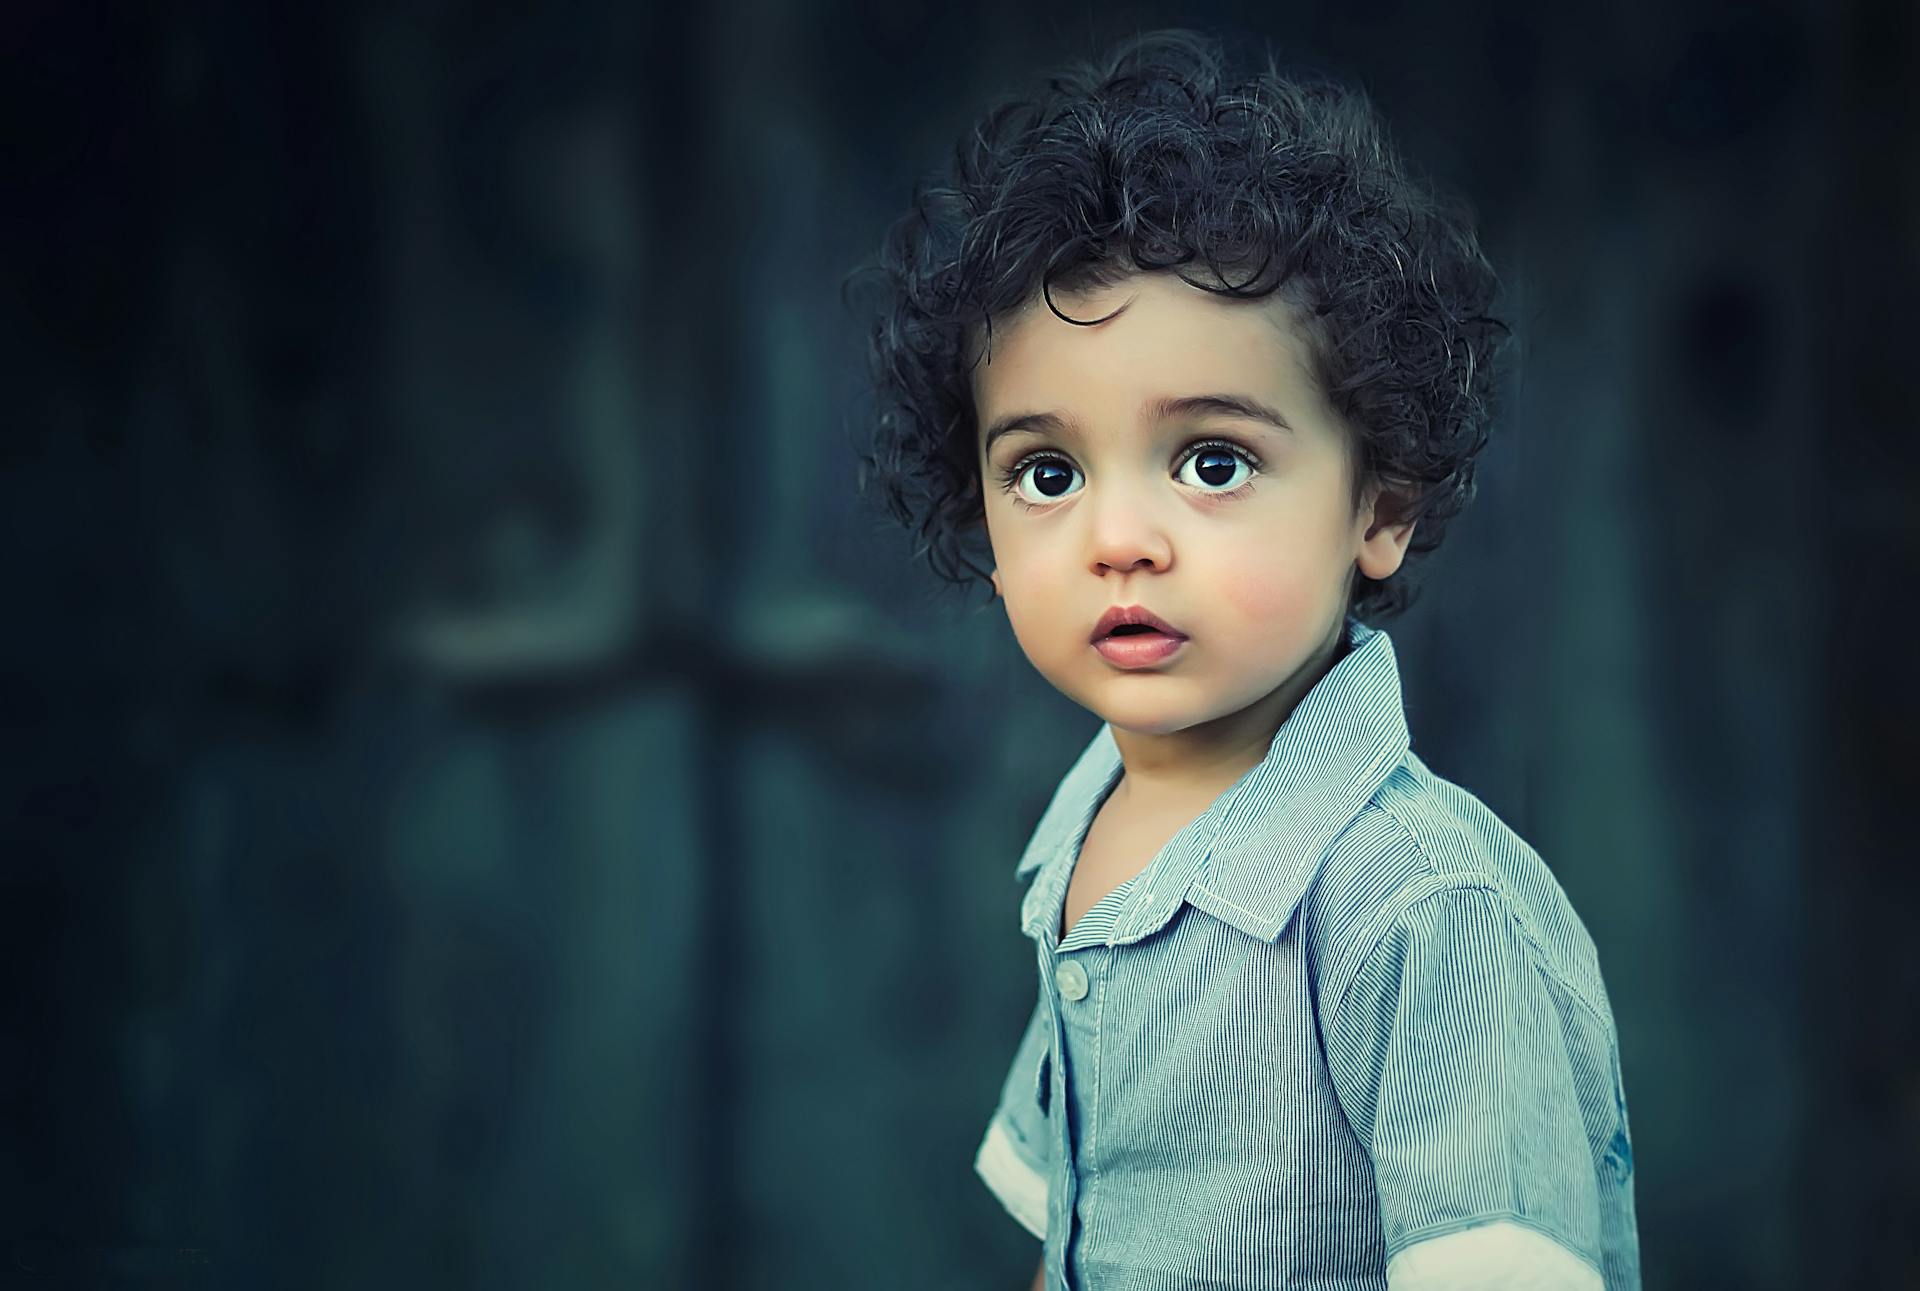 A close-up of a little boy | Source: Pexels